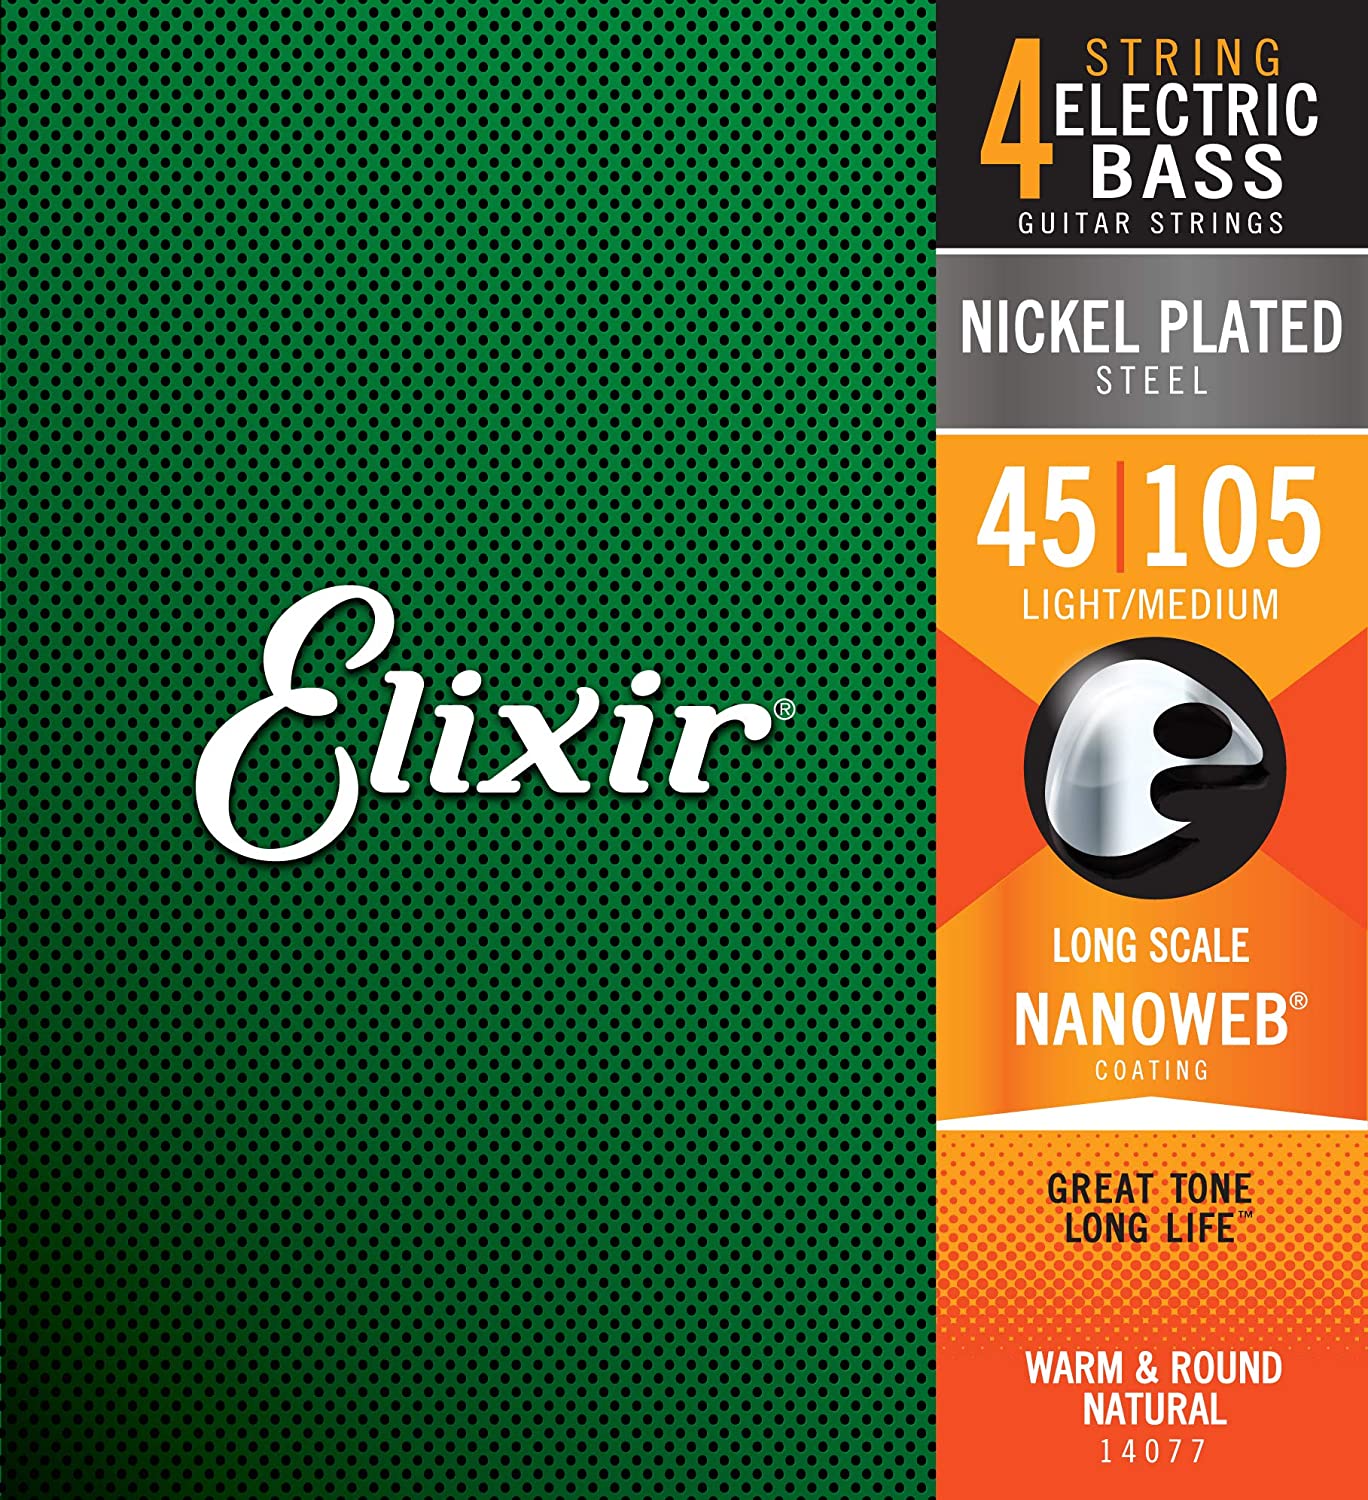 Elixir Strings 14077 Nanoweb Electric Bass Guitar Strings - .045-.105 Light/Medium Long Scale